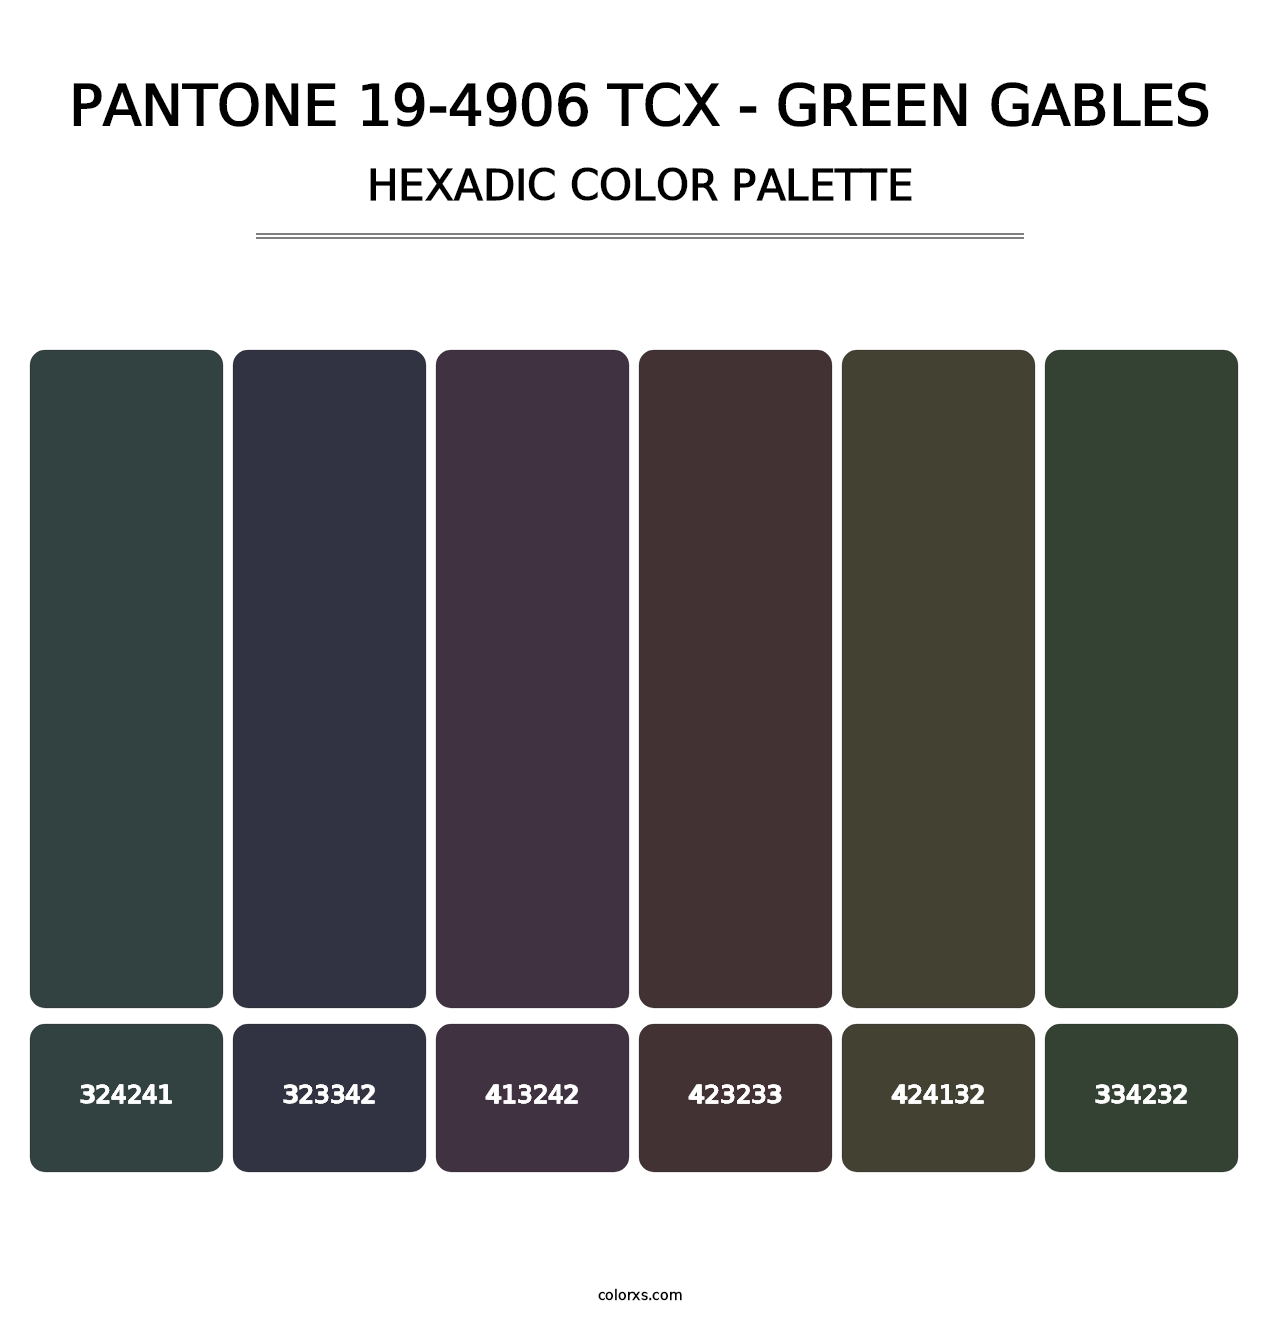 PANTONE 19-4906 TCX - Green Gables - Hexadic Color Palette